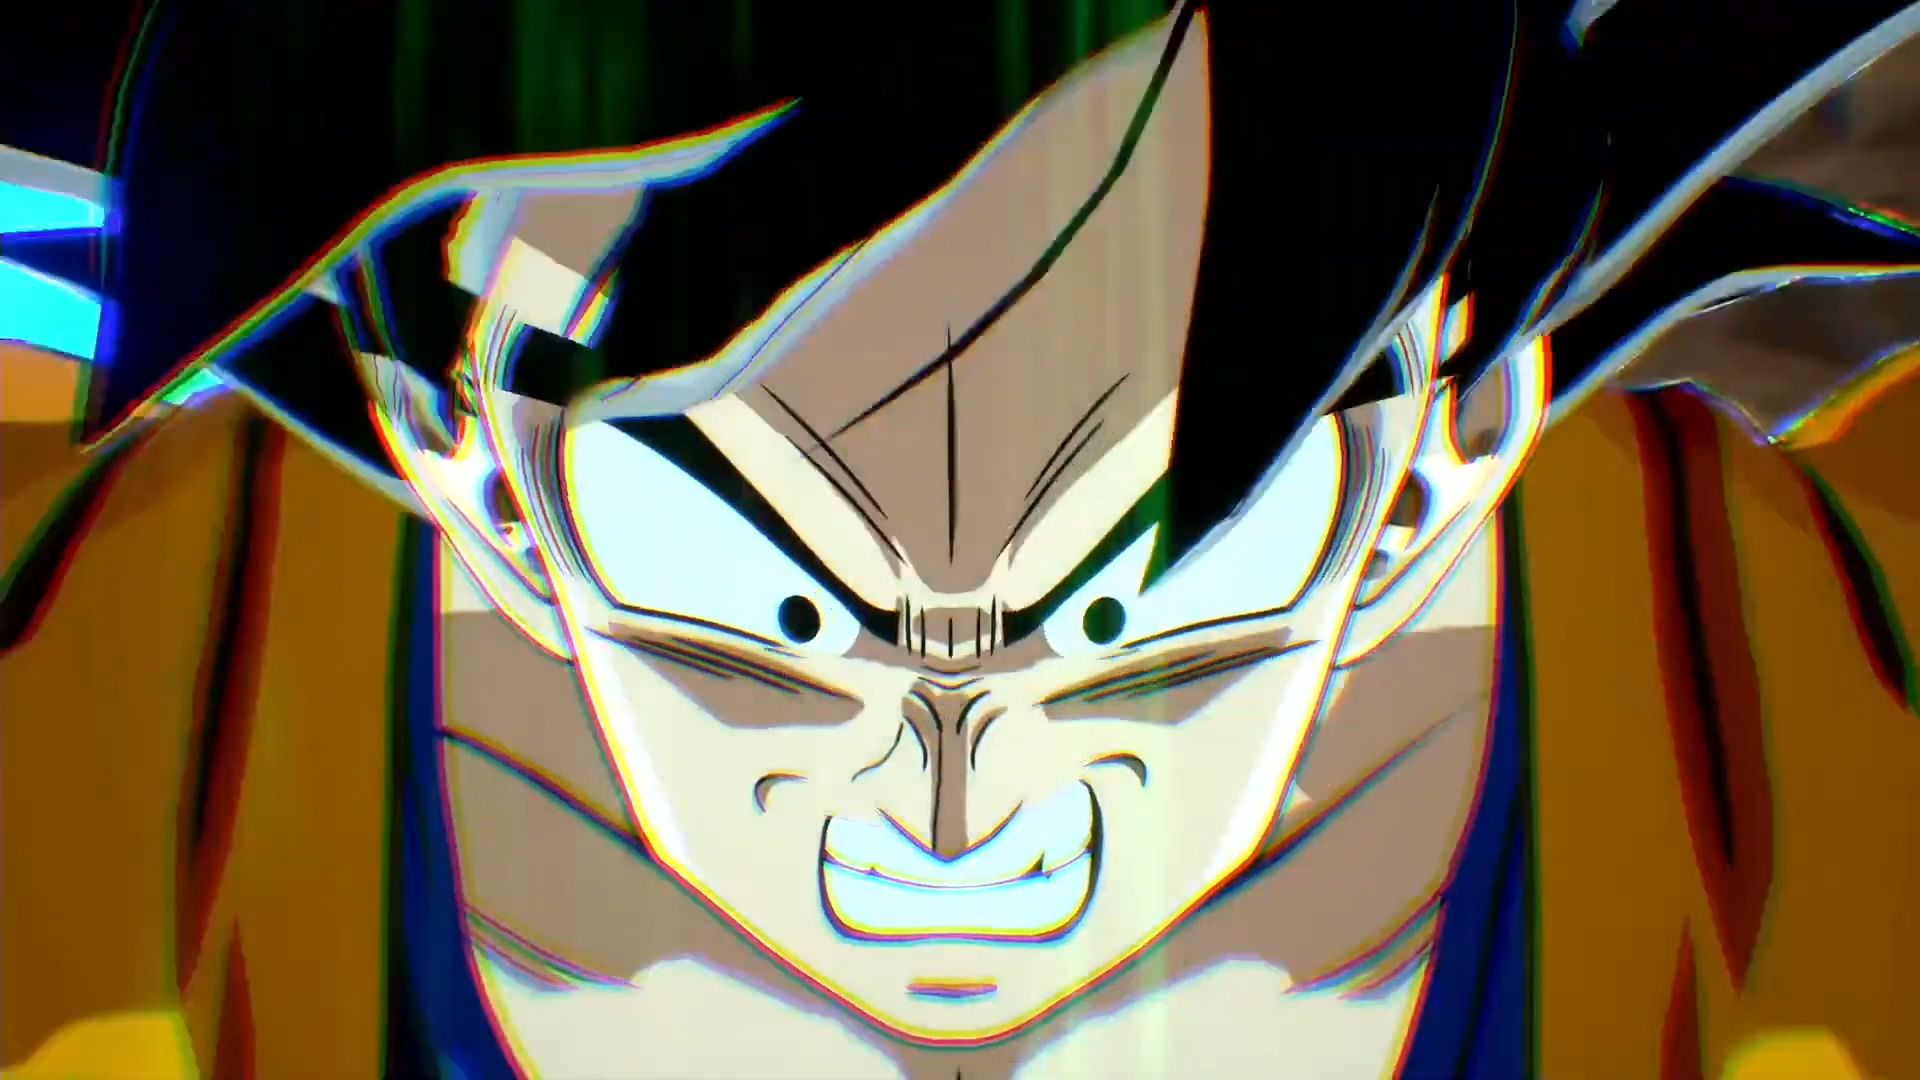 DRAGON BALL: Sparking! ZERO - Goku VS Vegeta Official Gameplay Trailer  [BUDOKAI TENKAICHI Series] 